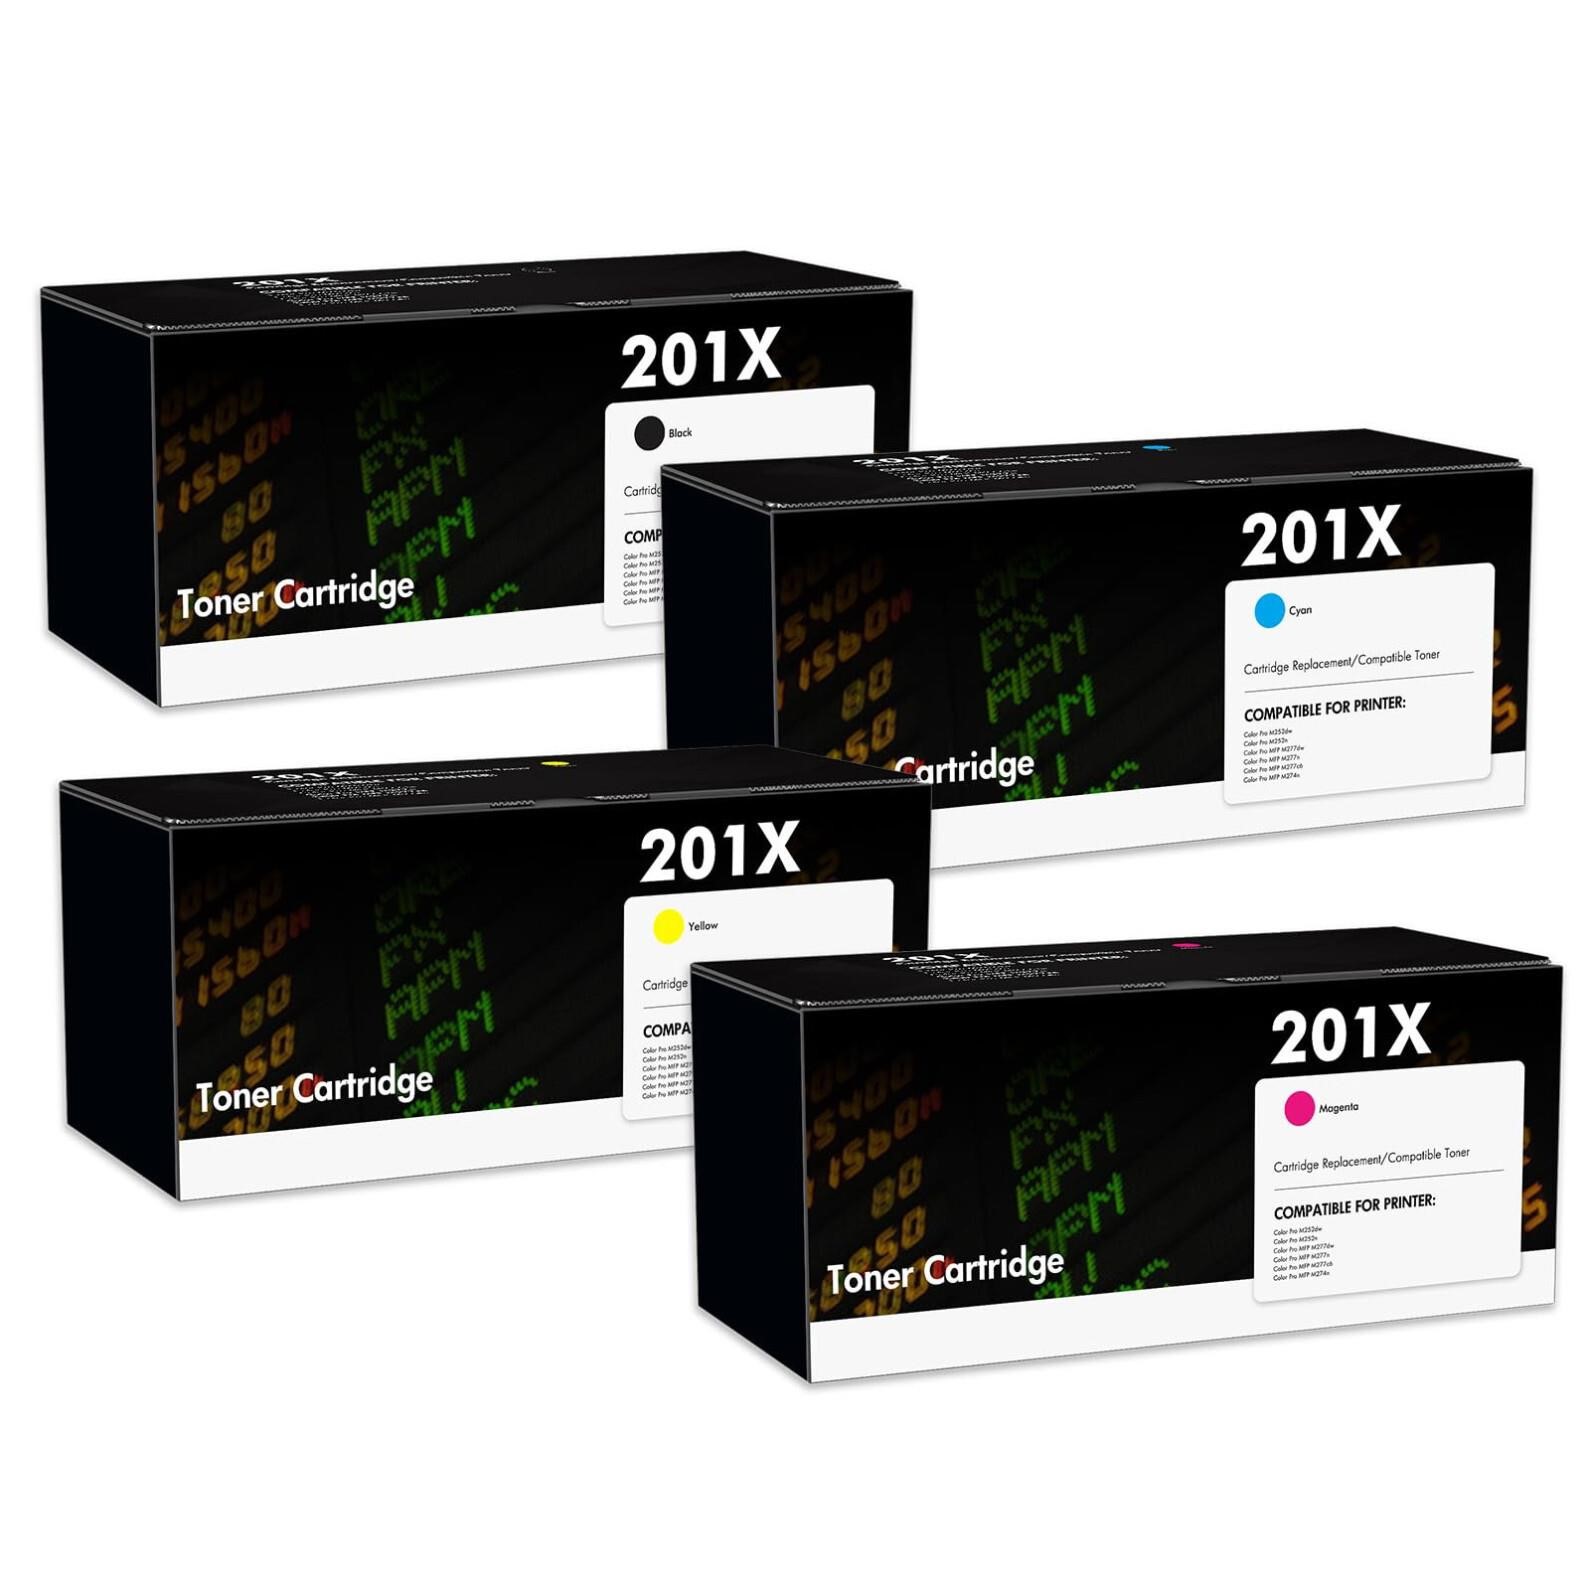 201X 4-Pack Toner Cartridges Compatible Replacemen